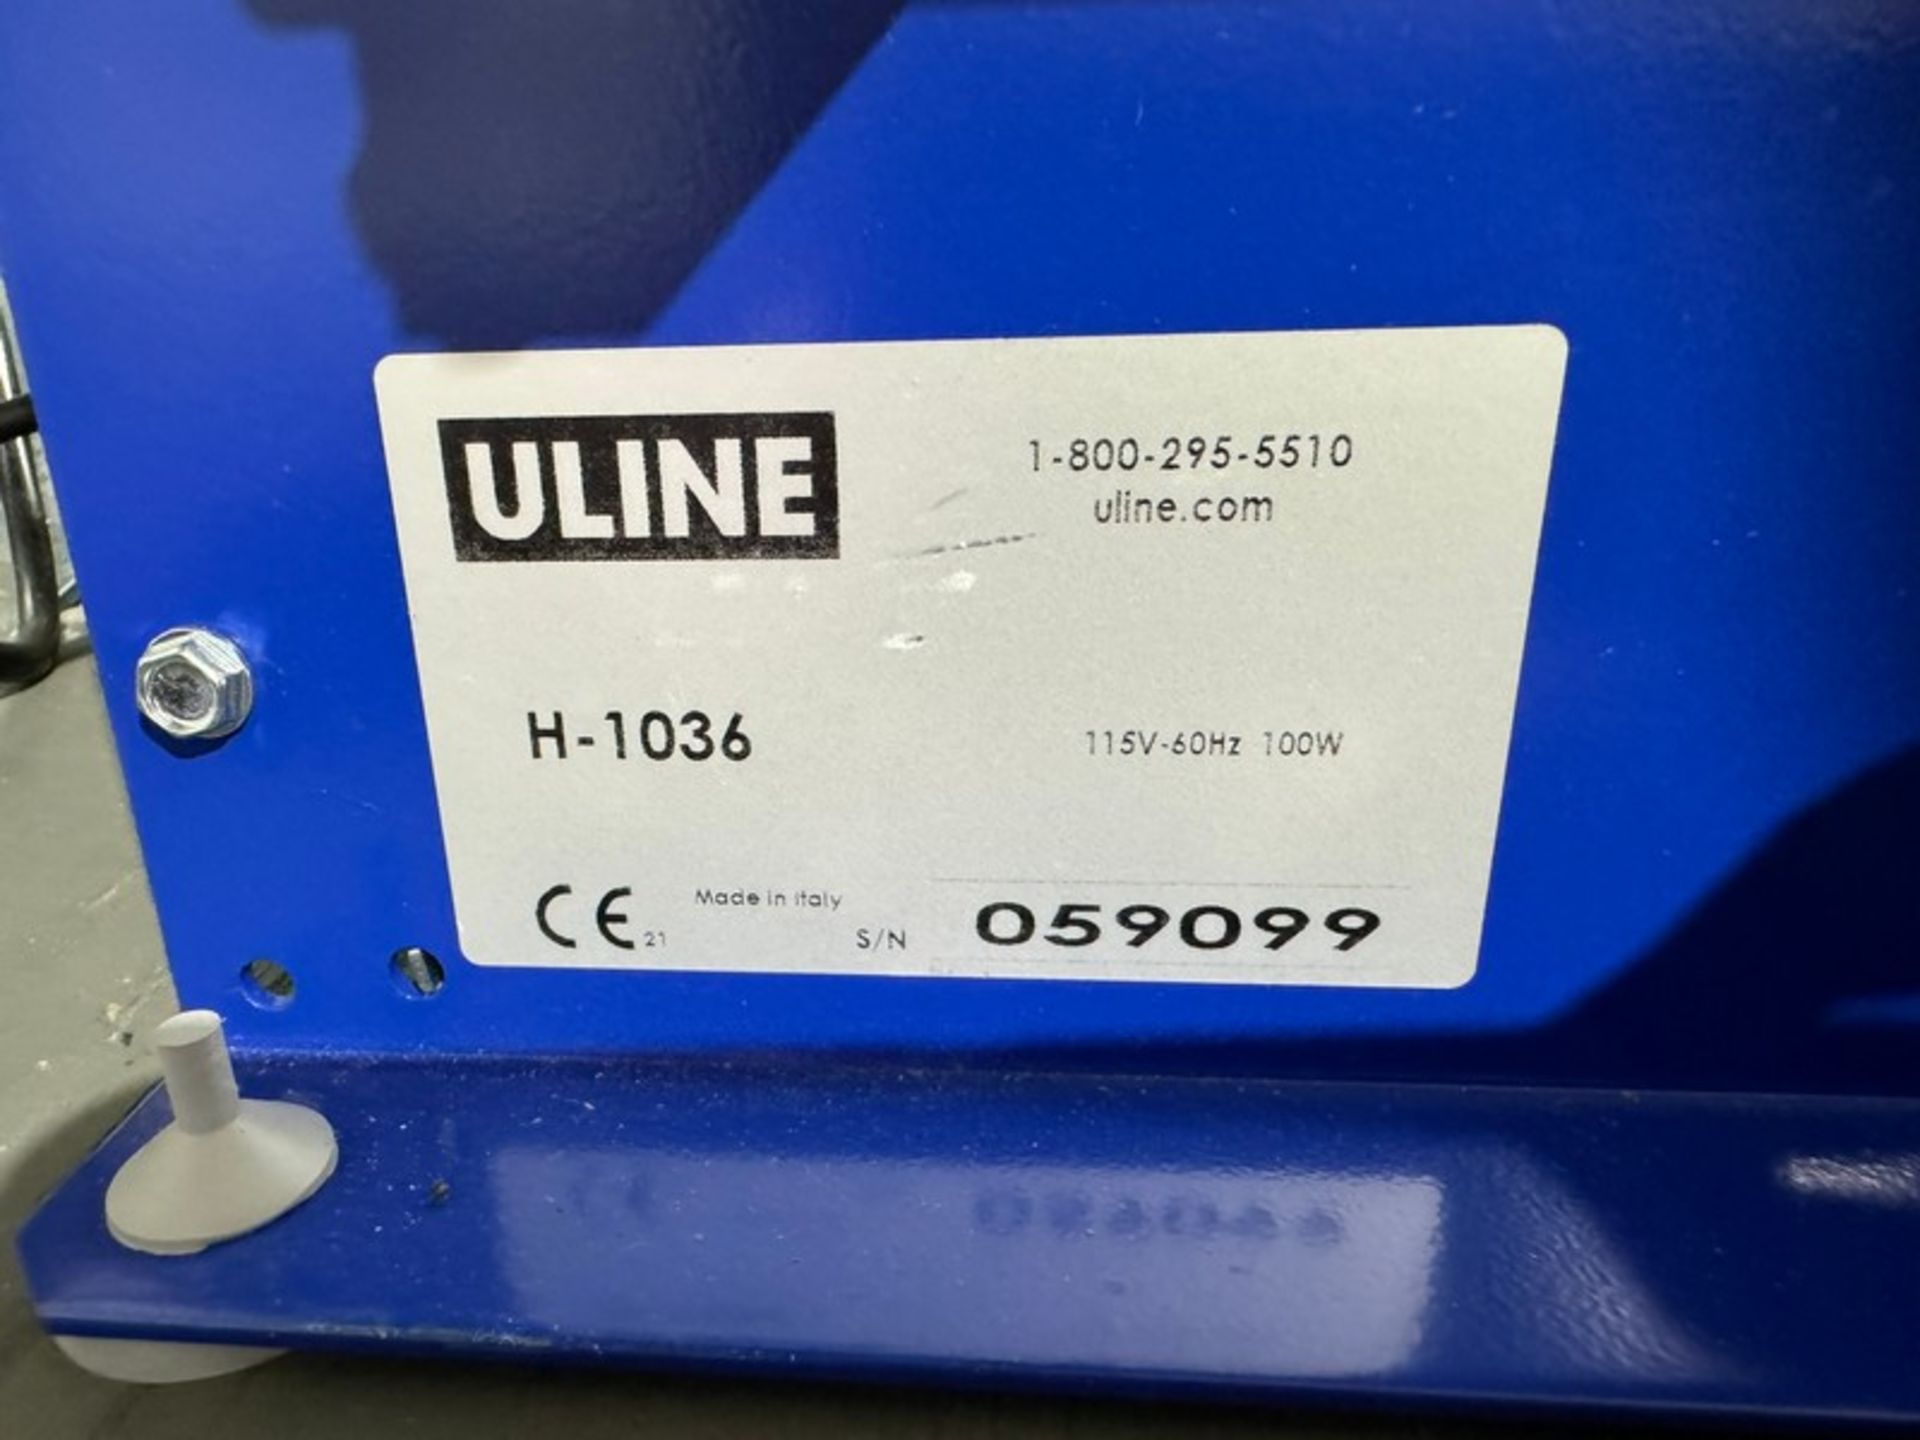 ULINE Taper, M/N H-1036, S/N 059099 (LOCATED IN MOUNT HOME, AR) - Image 3 of 3